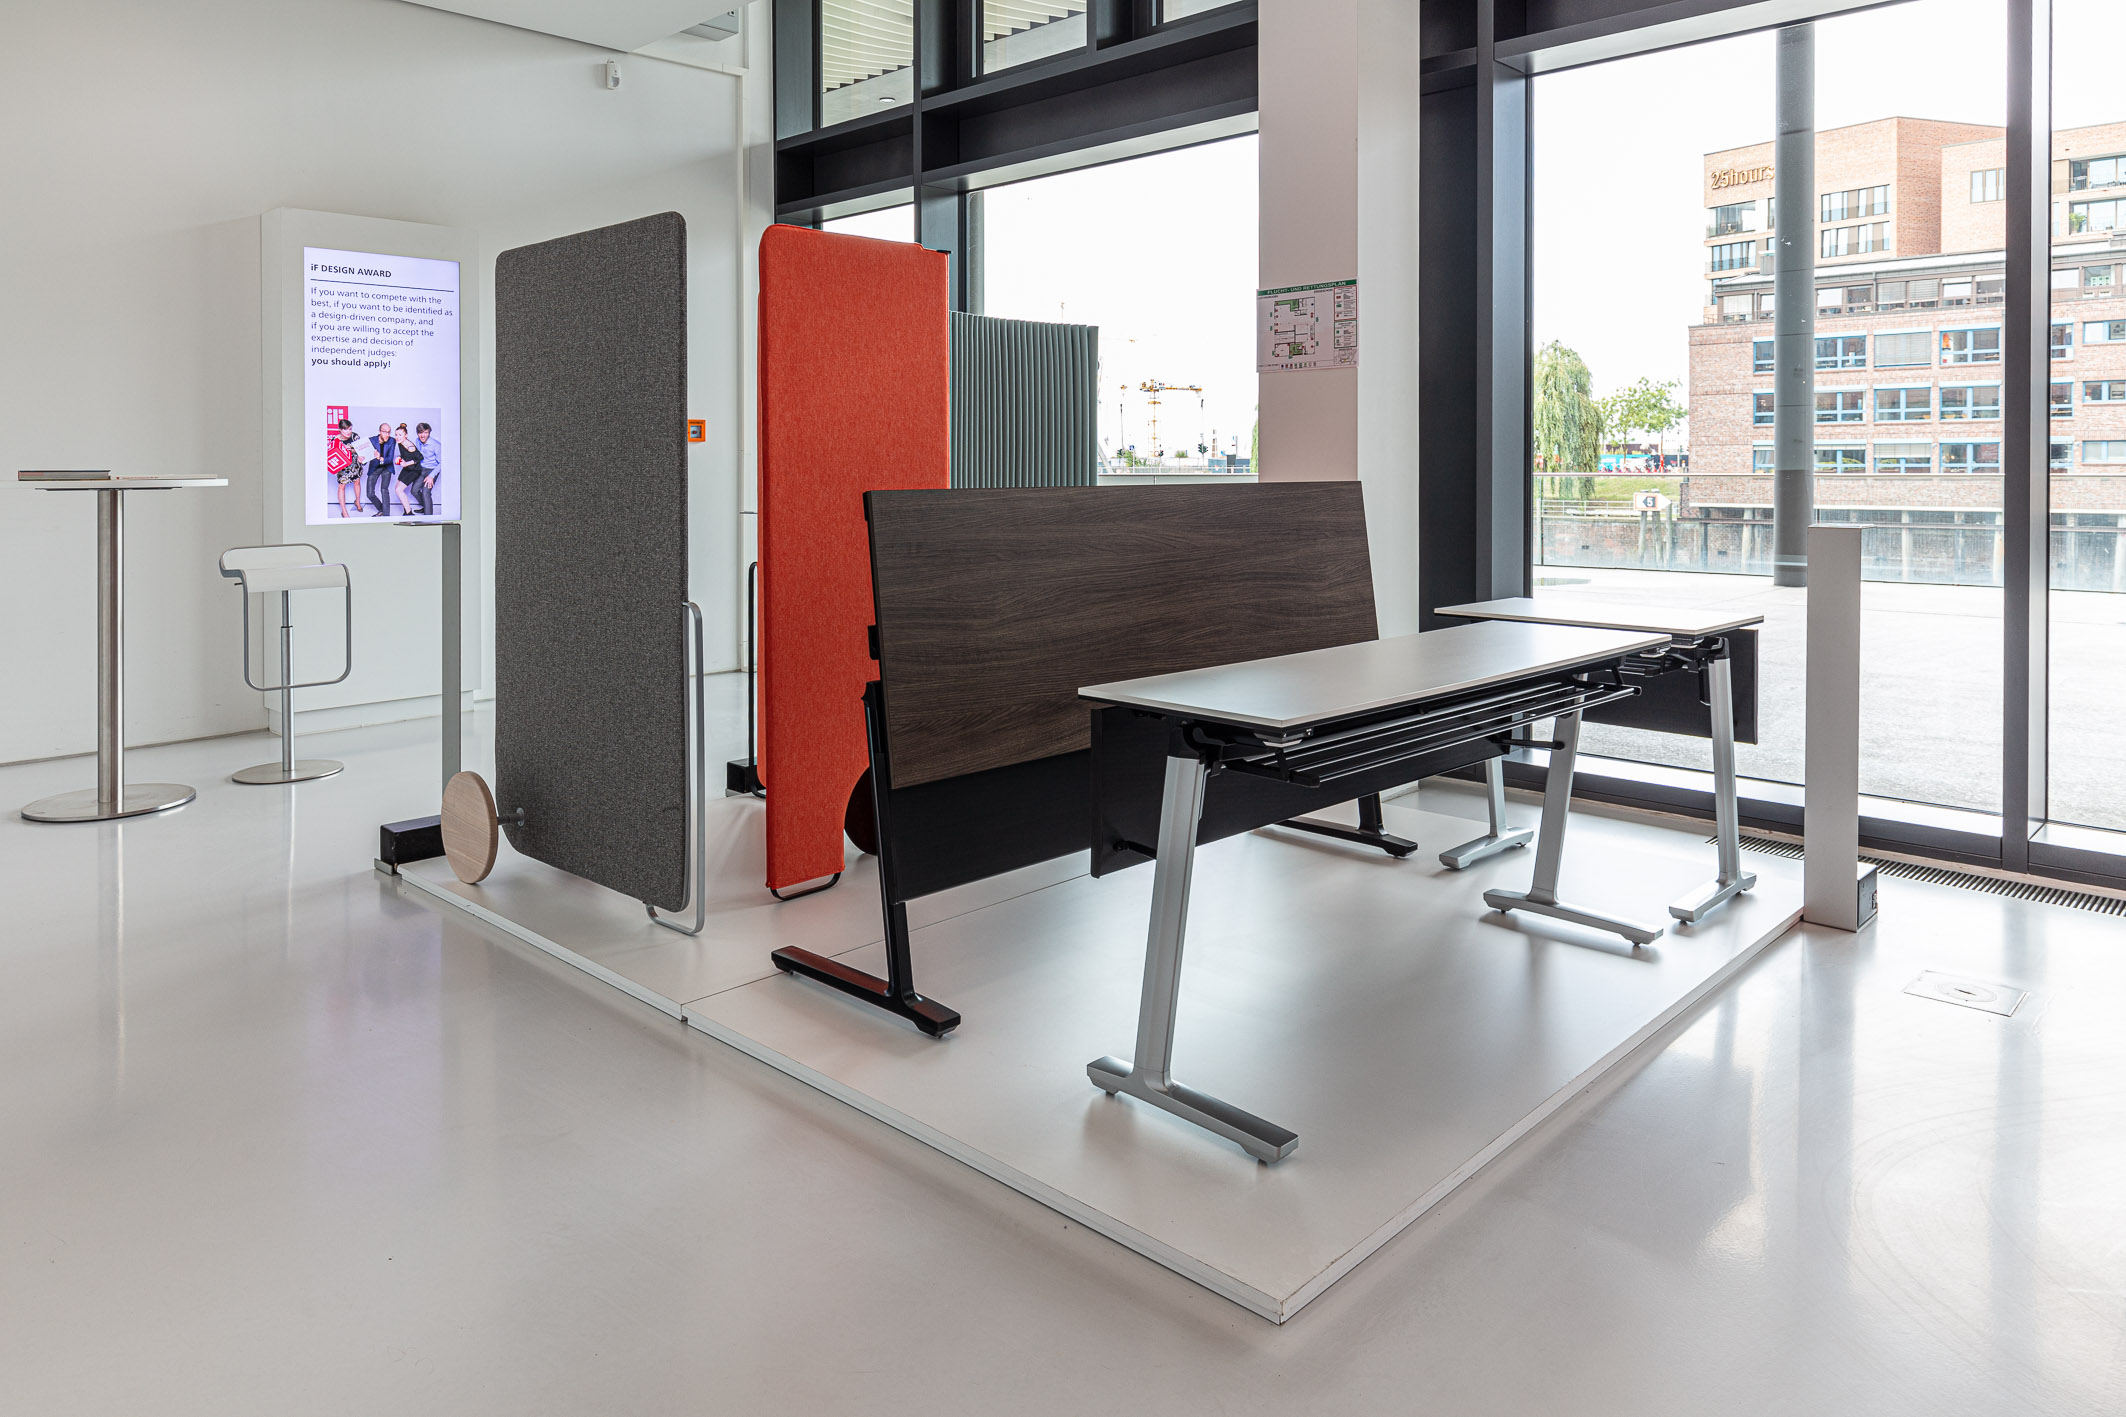 Shea+Latone developed WALS in iF Exhibition Hamburg